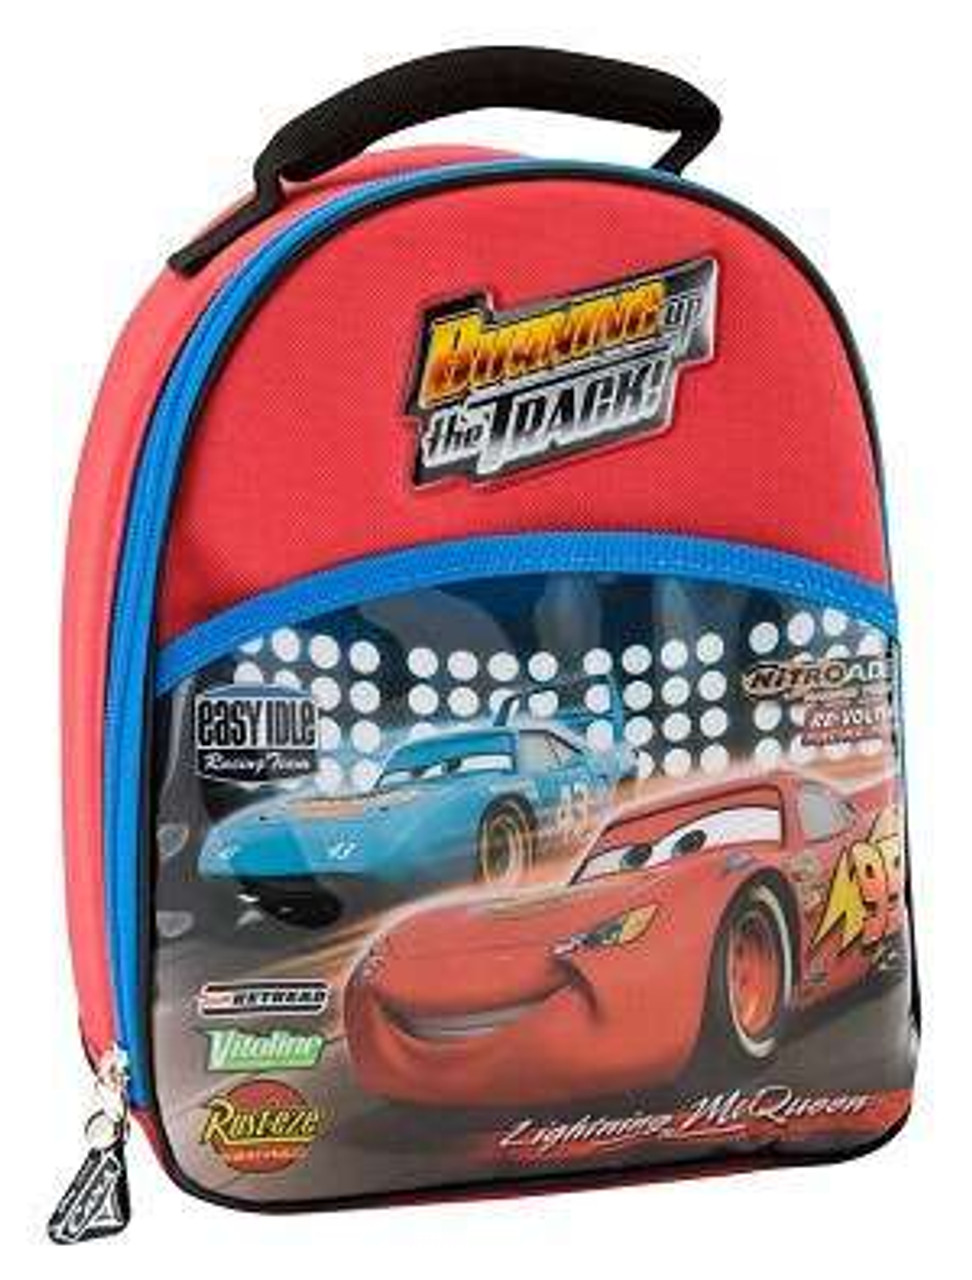 pixar cars backpack